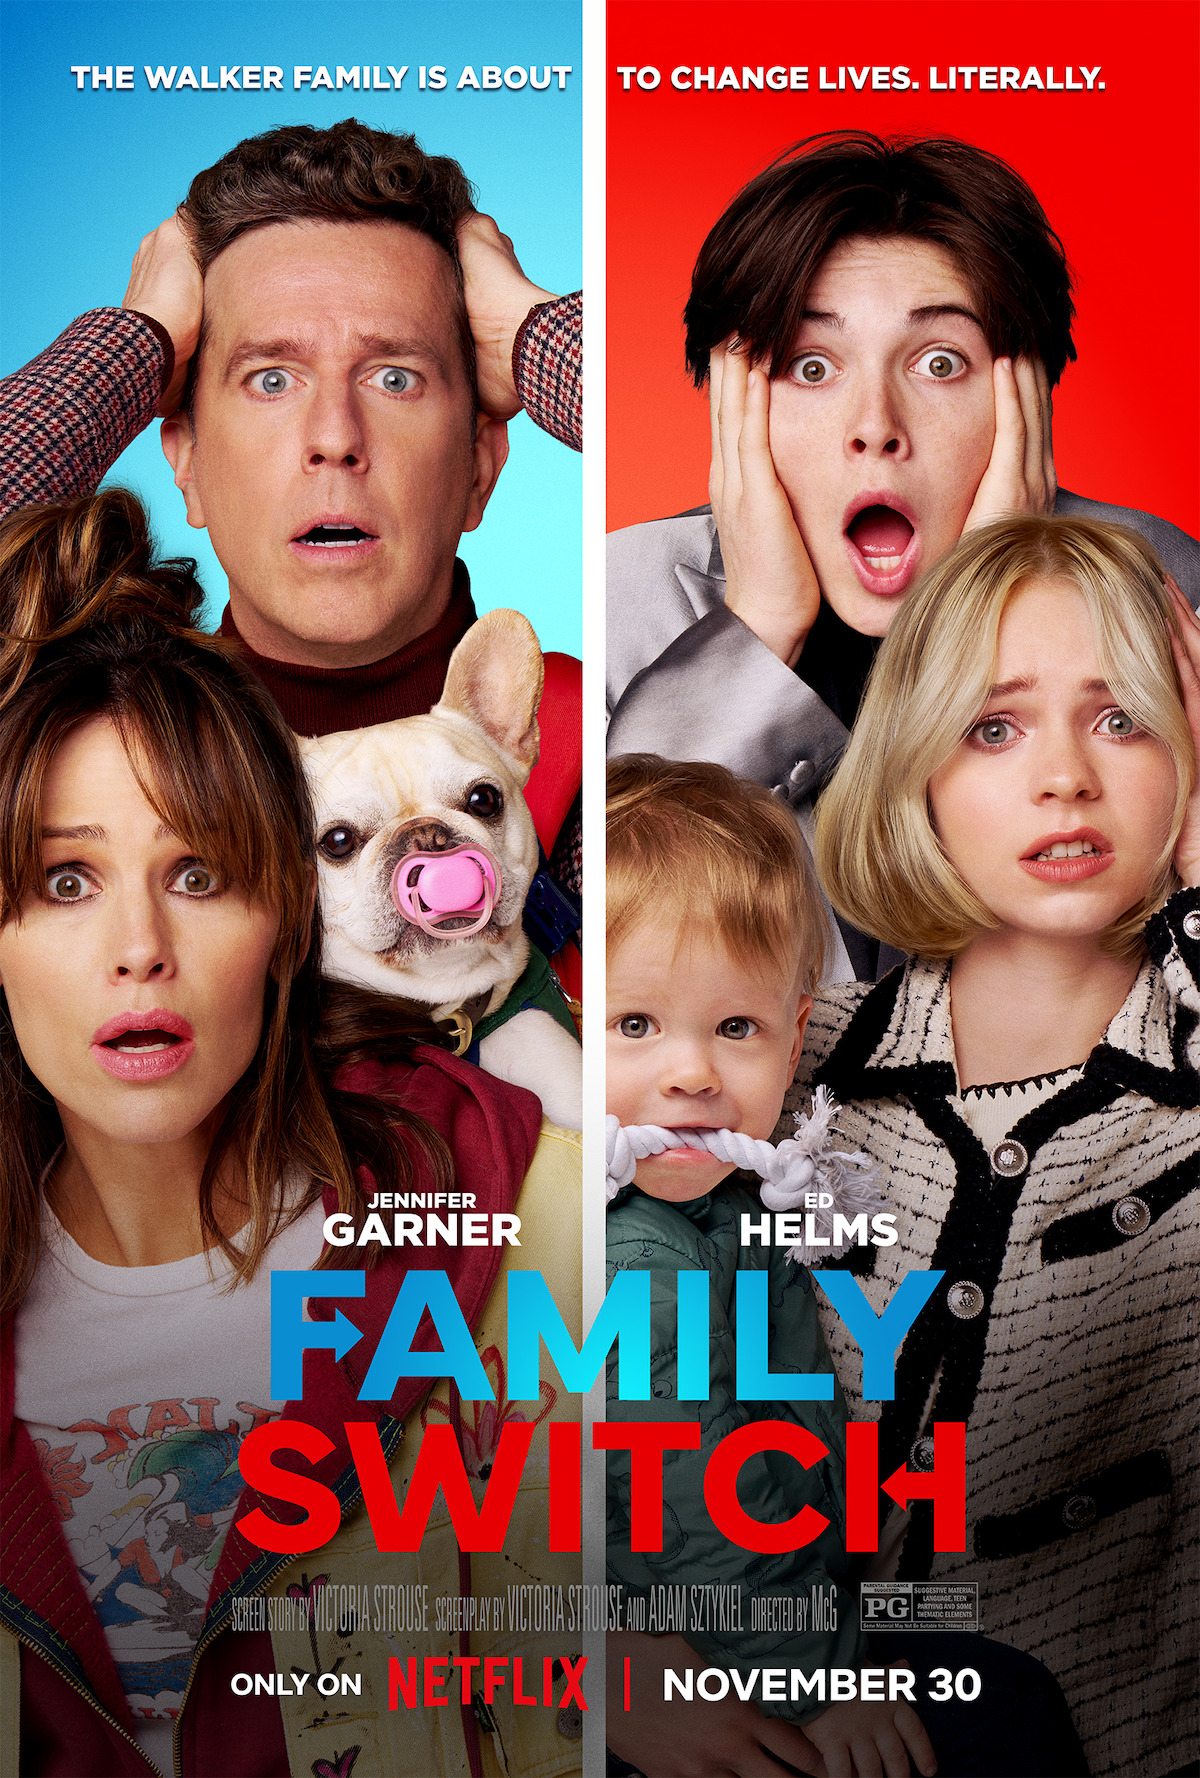 Jennifer Garner on her new Netflix family comedy Yes Day